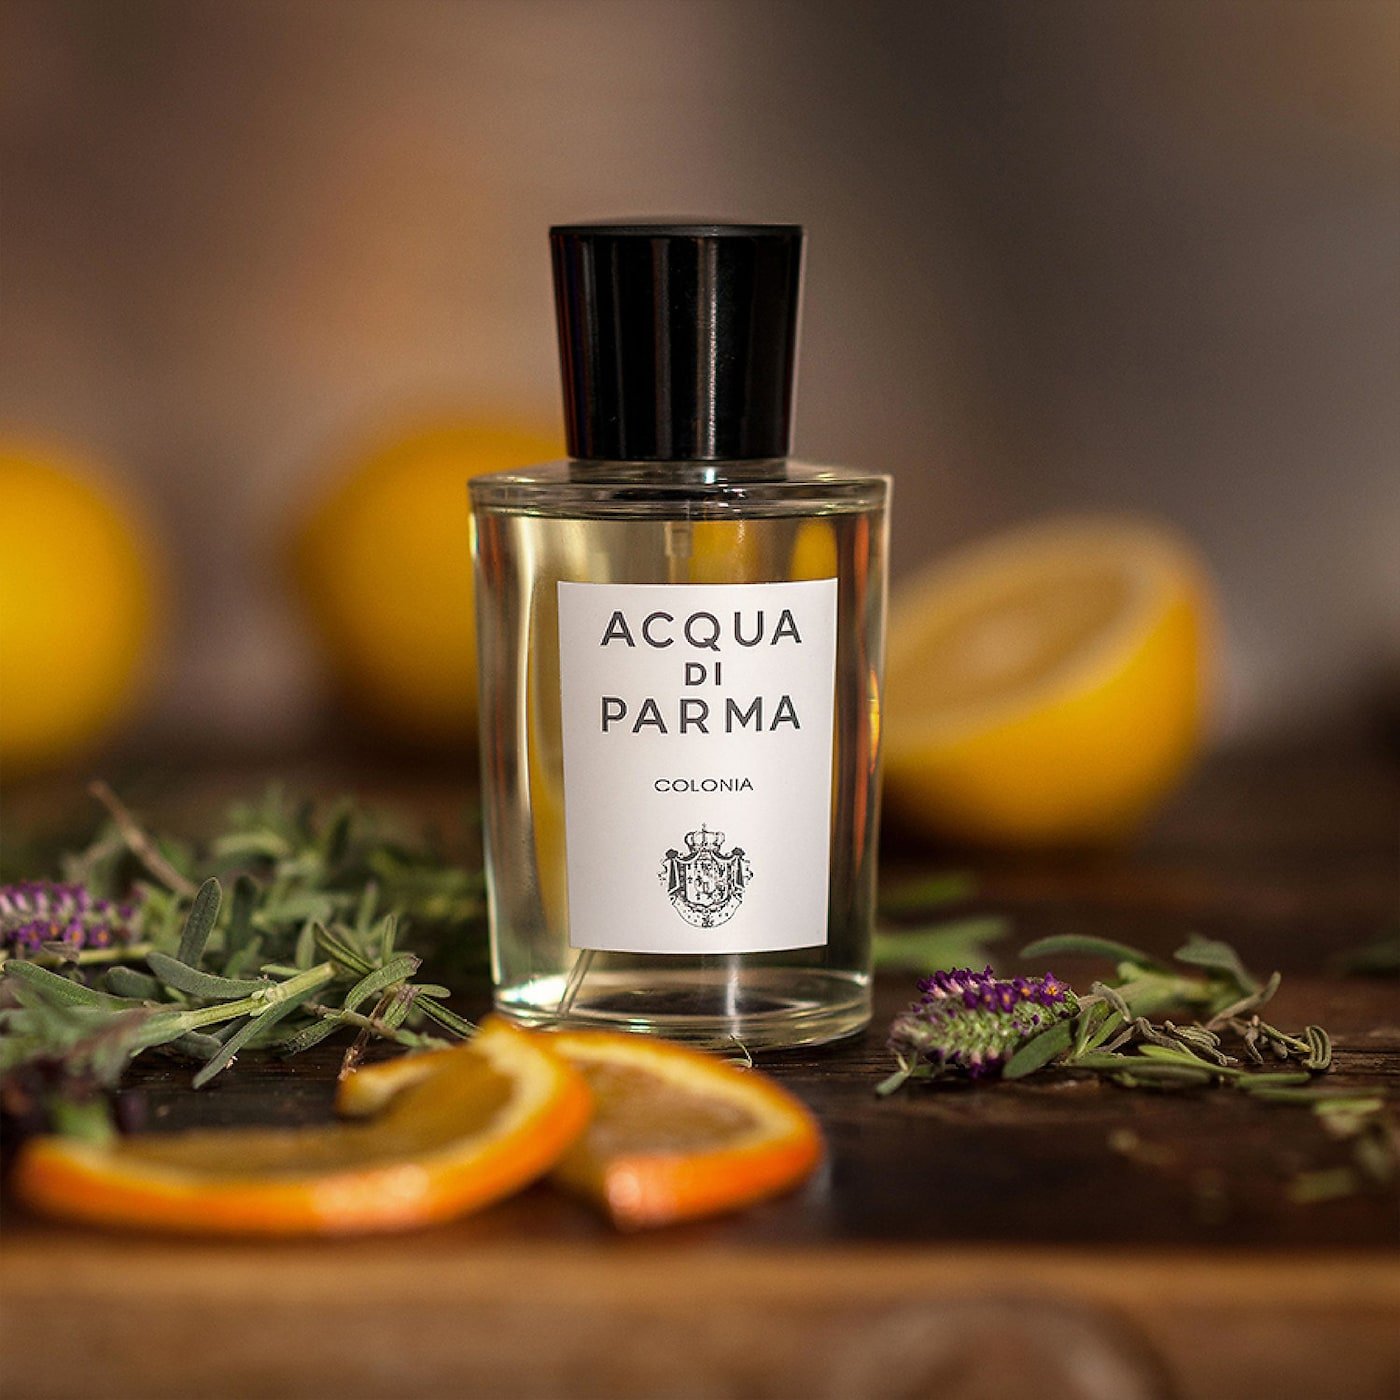 Acqua Di Parma Colonia Eau De Cologne | My Perfume Shop Australia